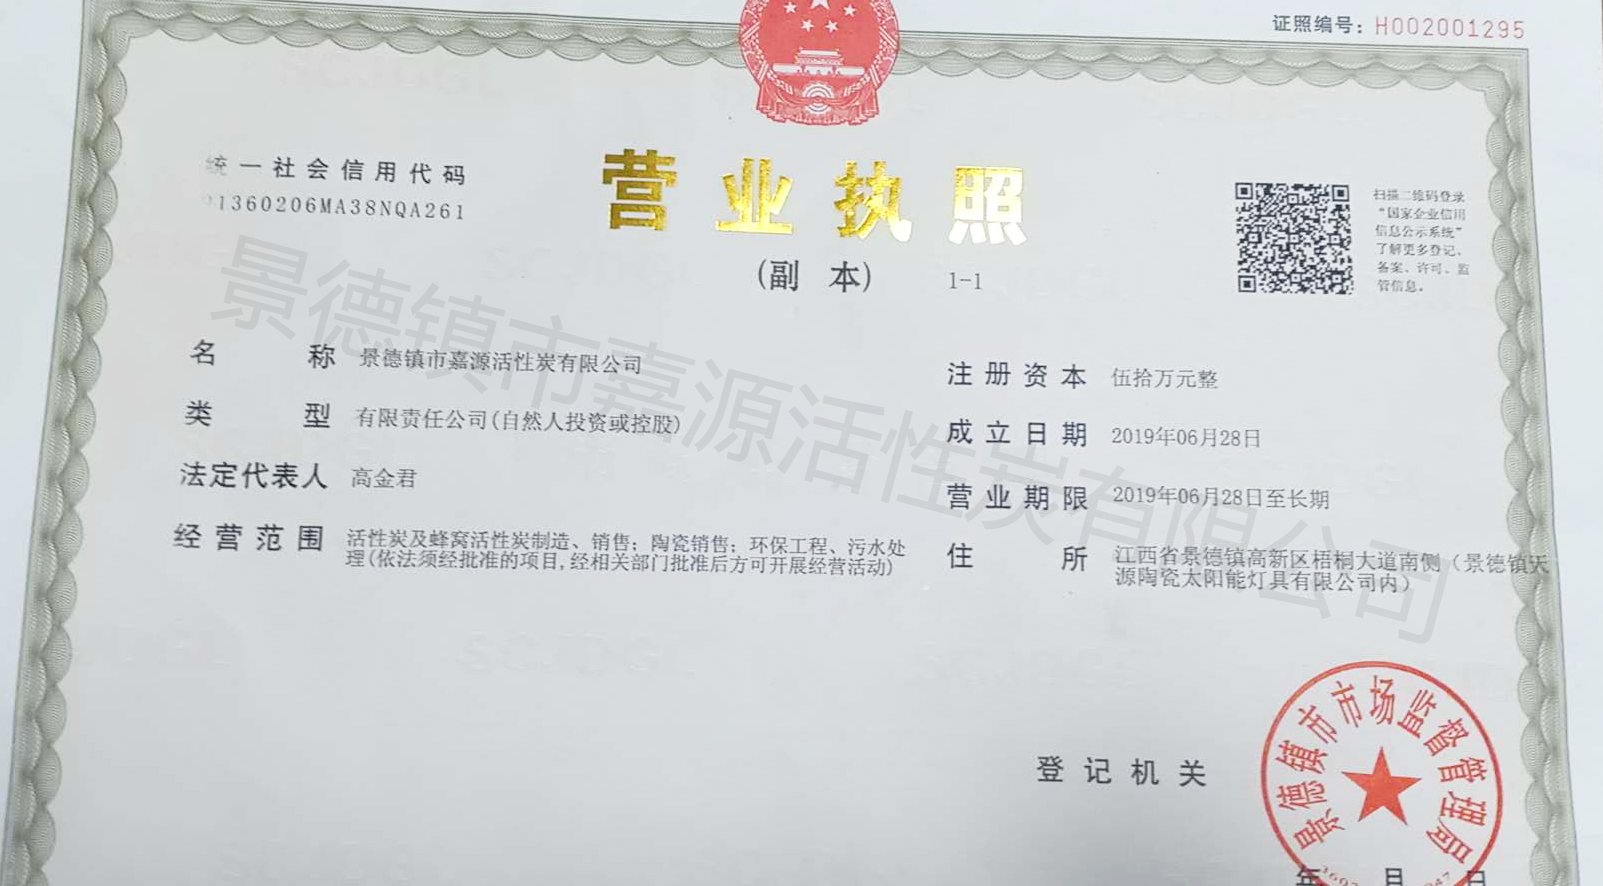  Jingdezhen Jiayuan Activated Carbon Co., Ltd